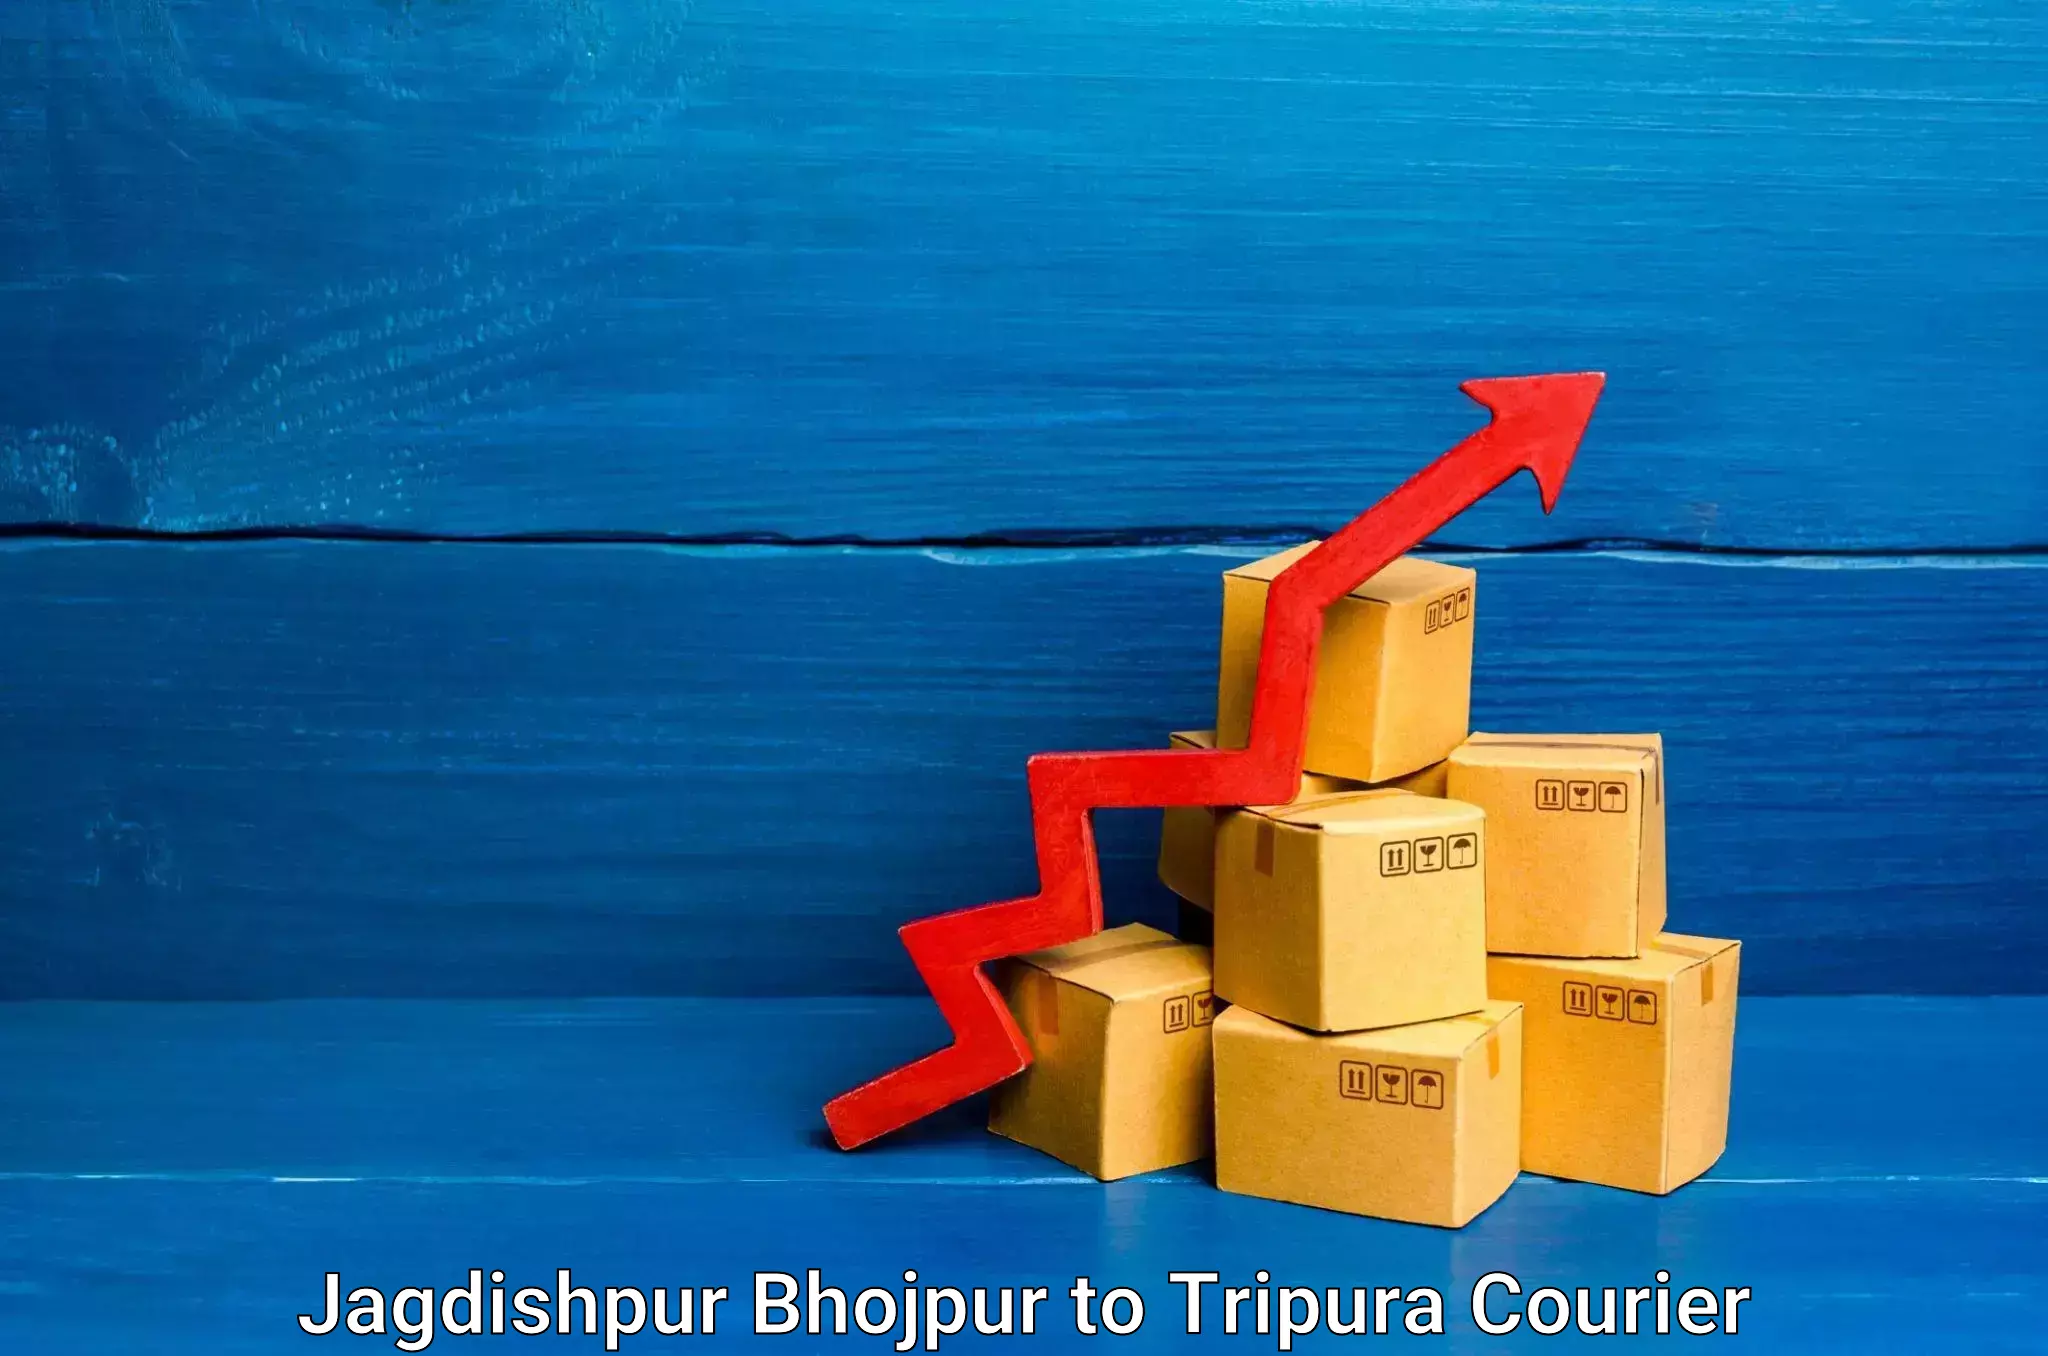 Furniture moving experts Jagdishpur Bhojpur to Udaipur Tripura